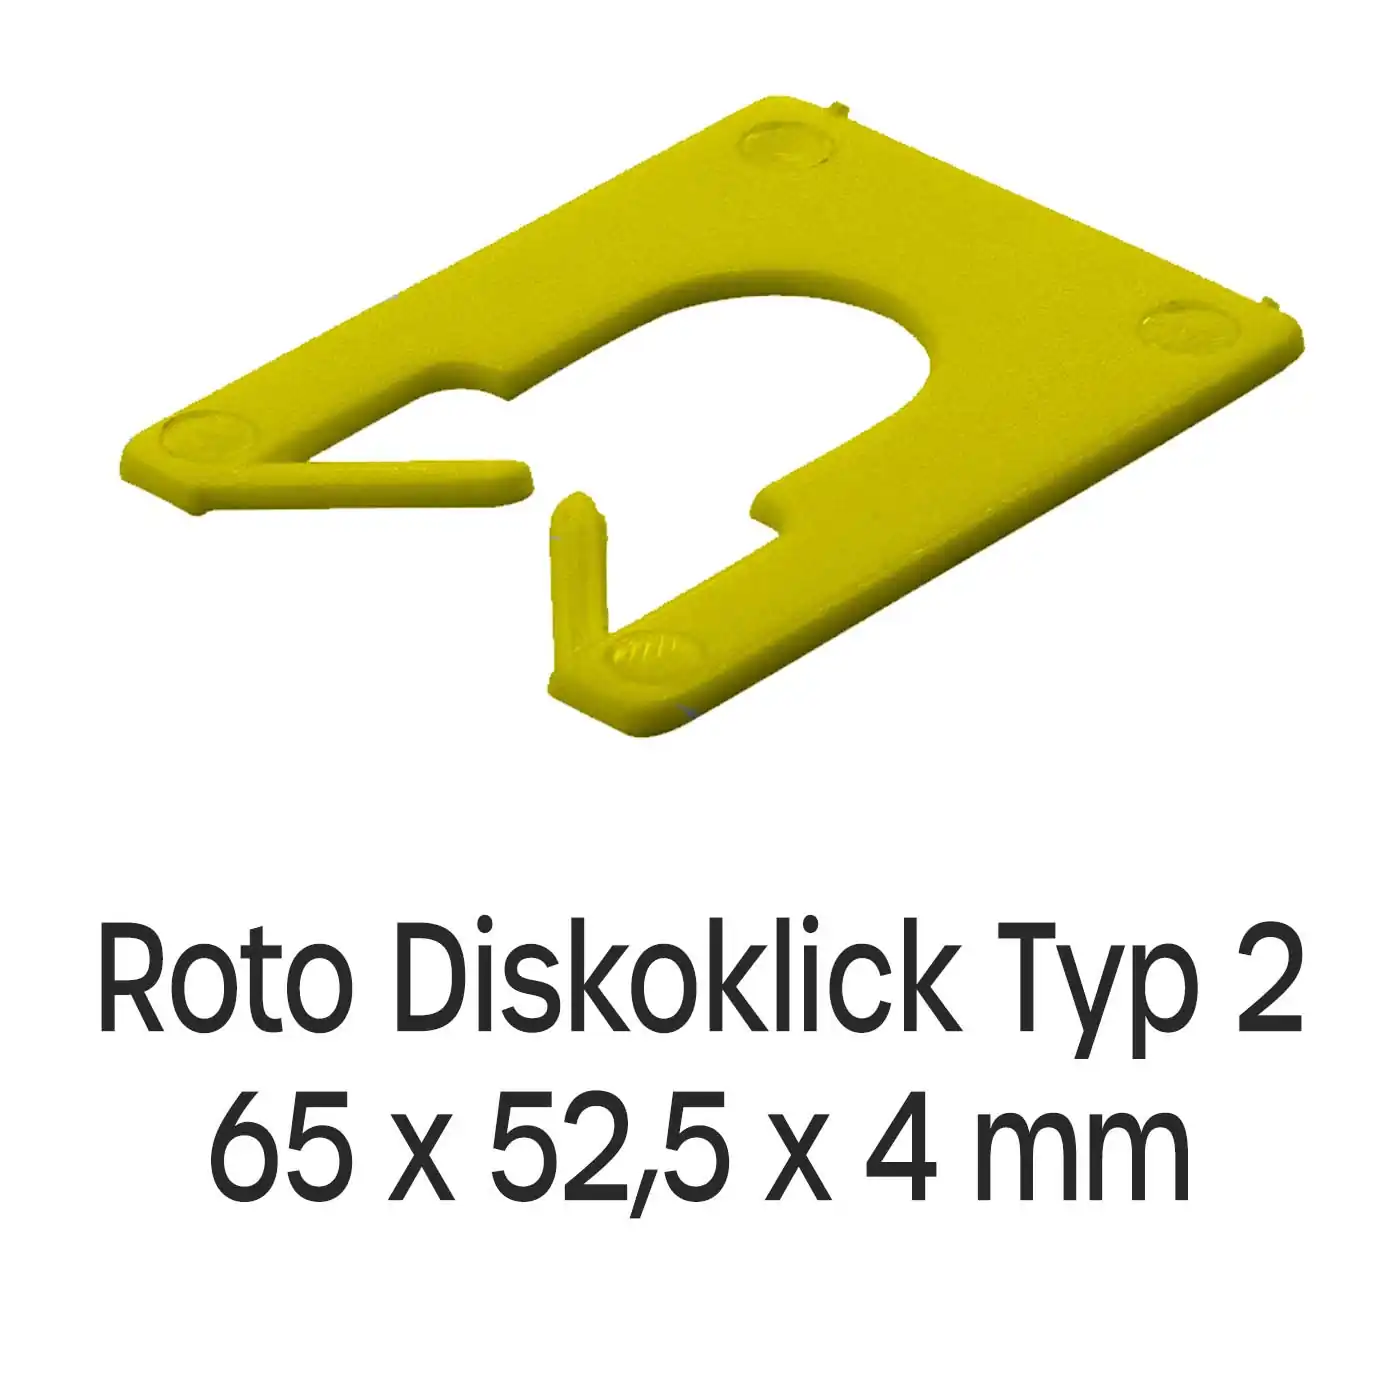 Distanzplatten Roto Diskoklick Typ 2 65 x 52,5 x 4 mm 1000 Stück